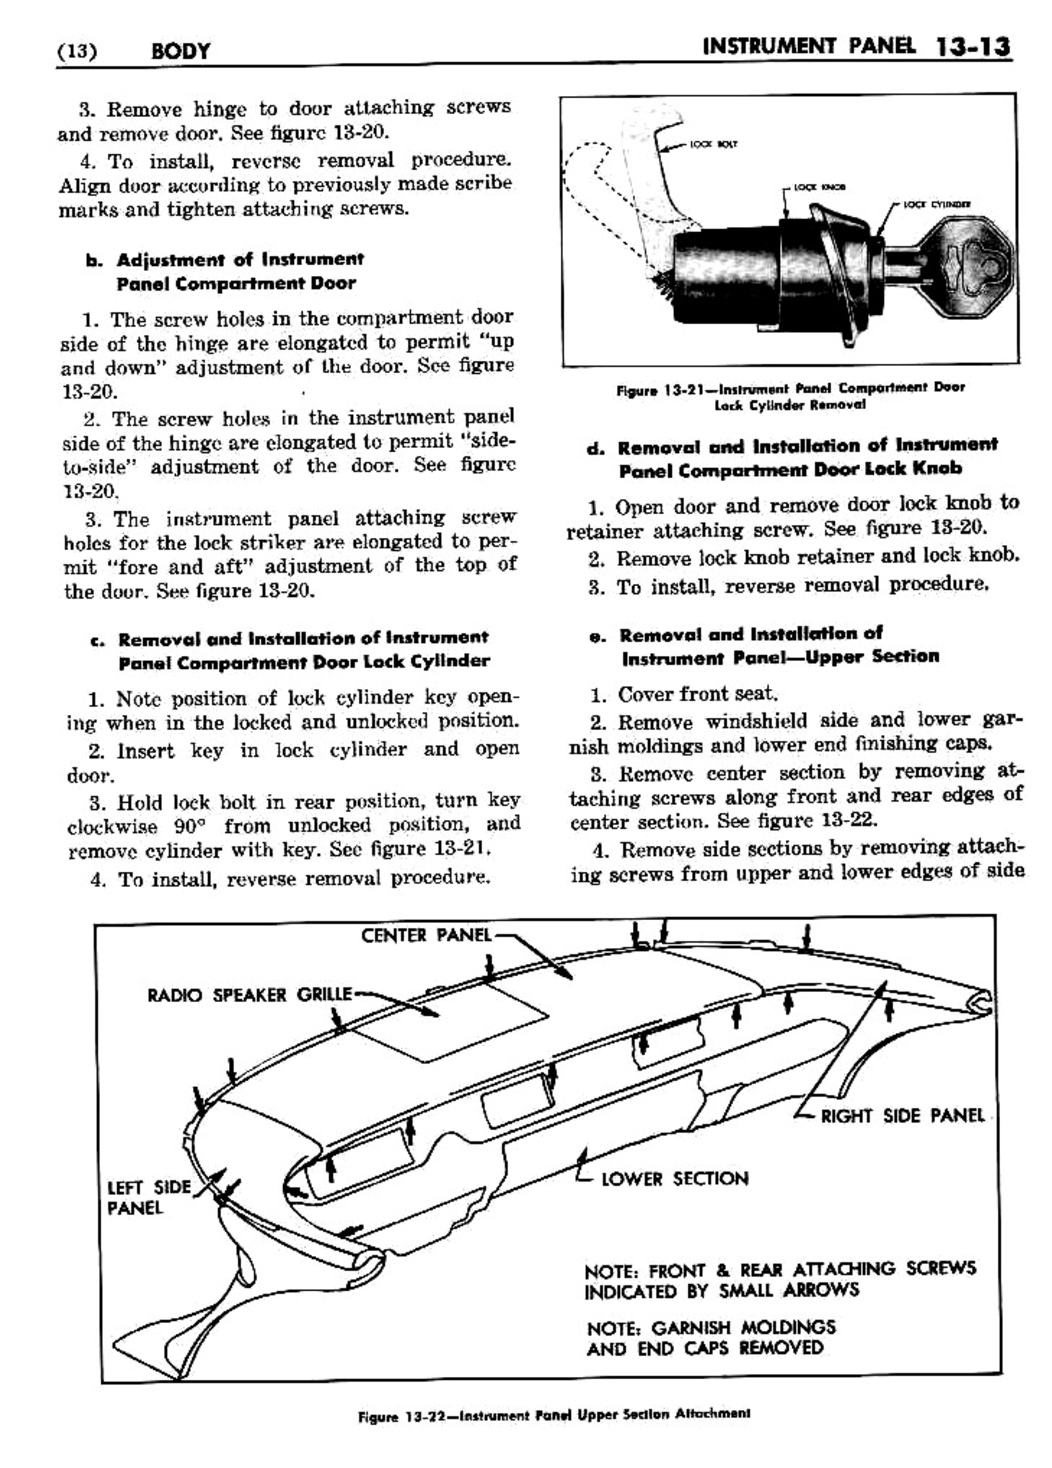 n_1957 Buick Body Service Manual-015-015.jpg